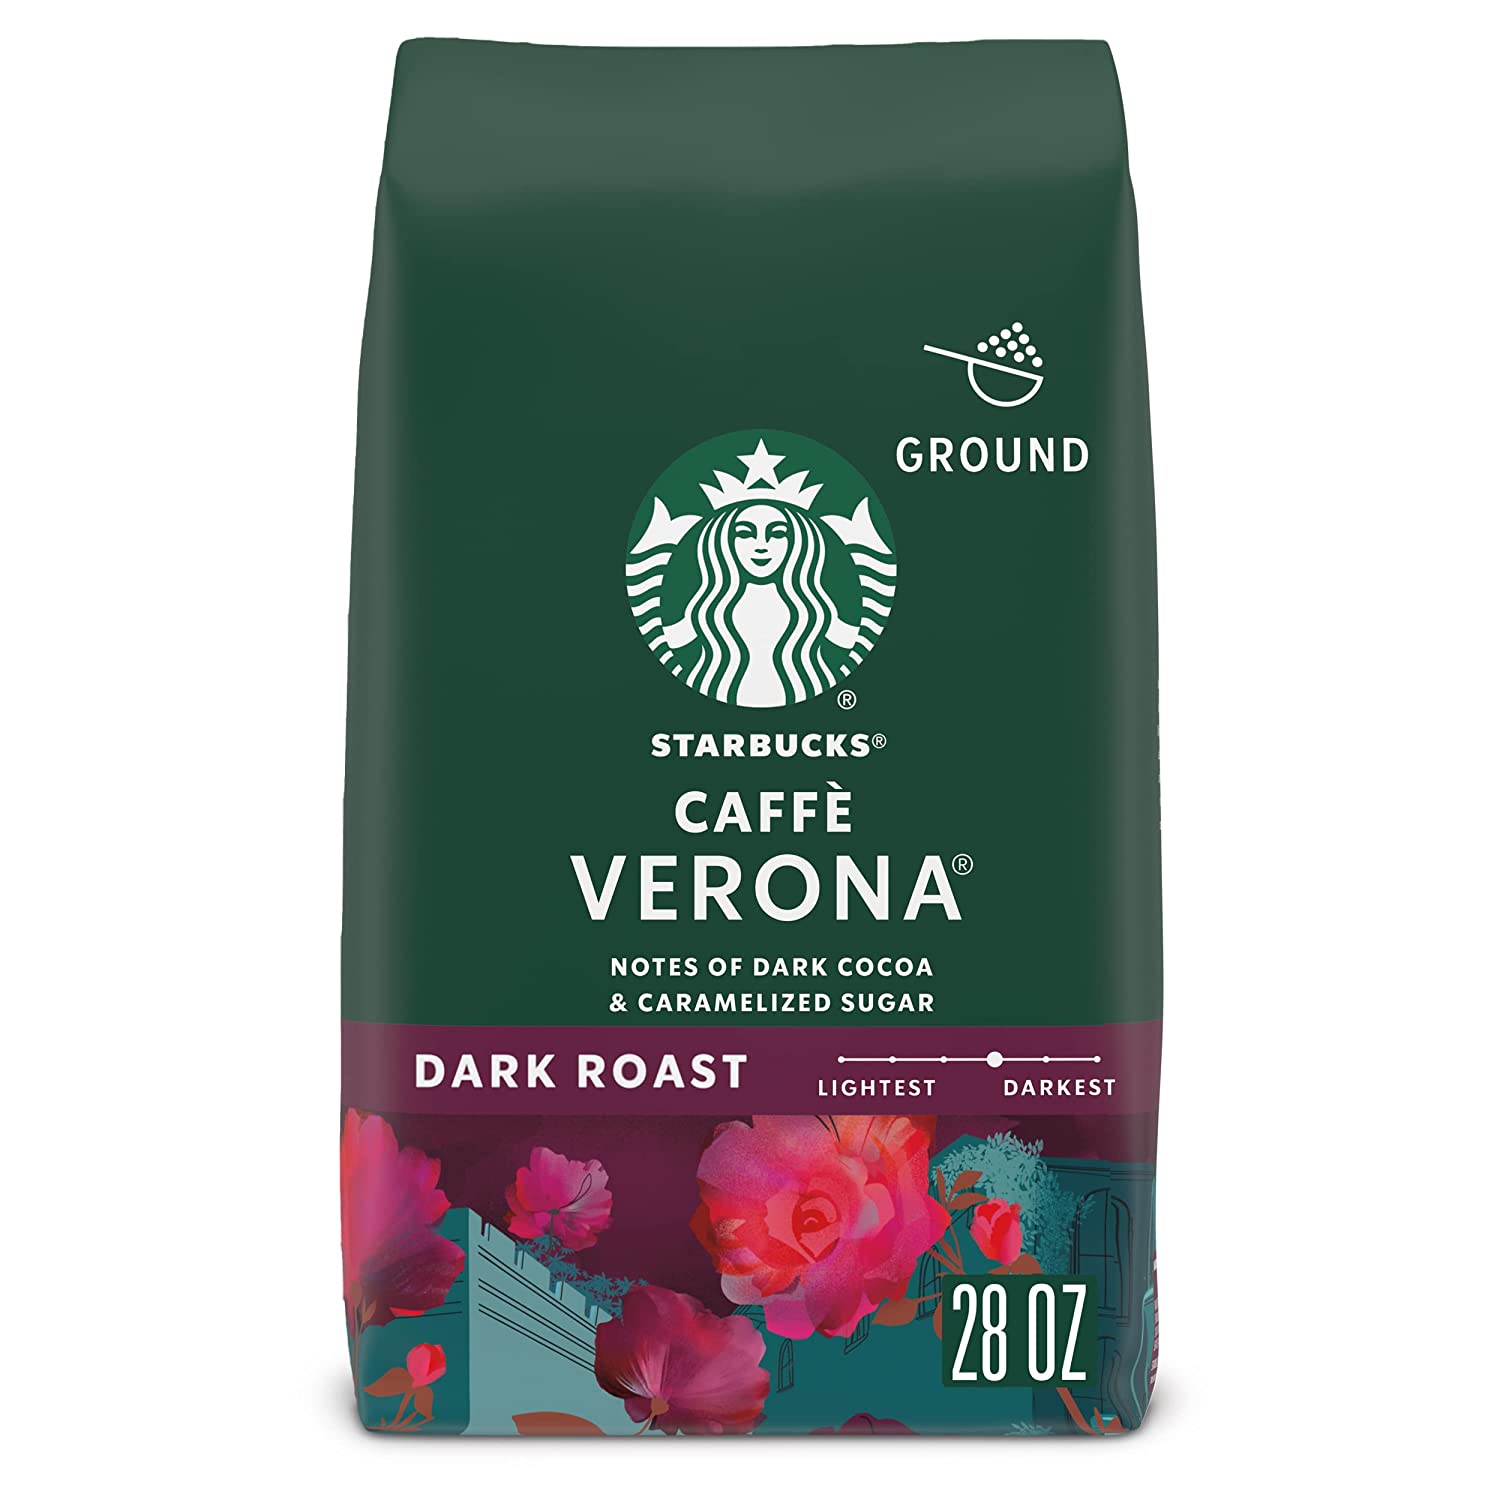 Starbucks Caffè Verona Ground Dark Roast Coffee BIG 28 oz ONLY $9.97 at Amazon!